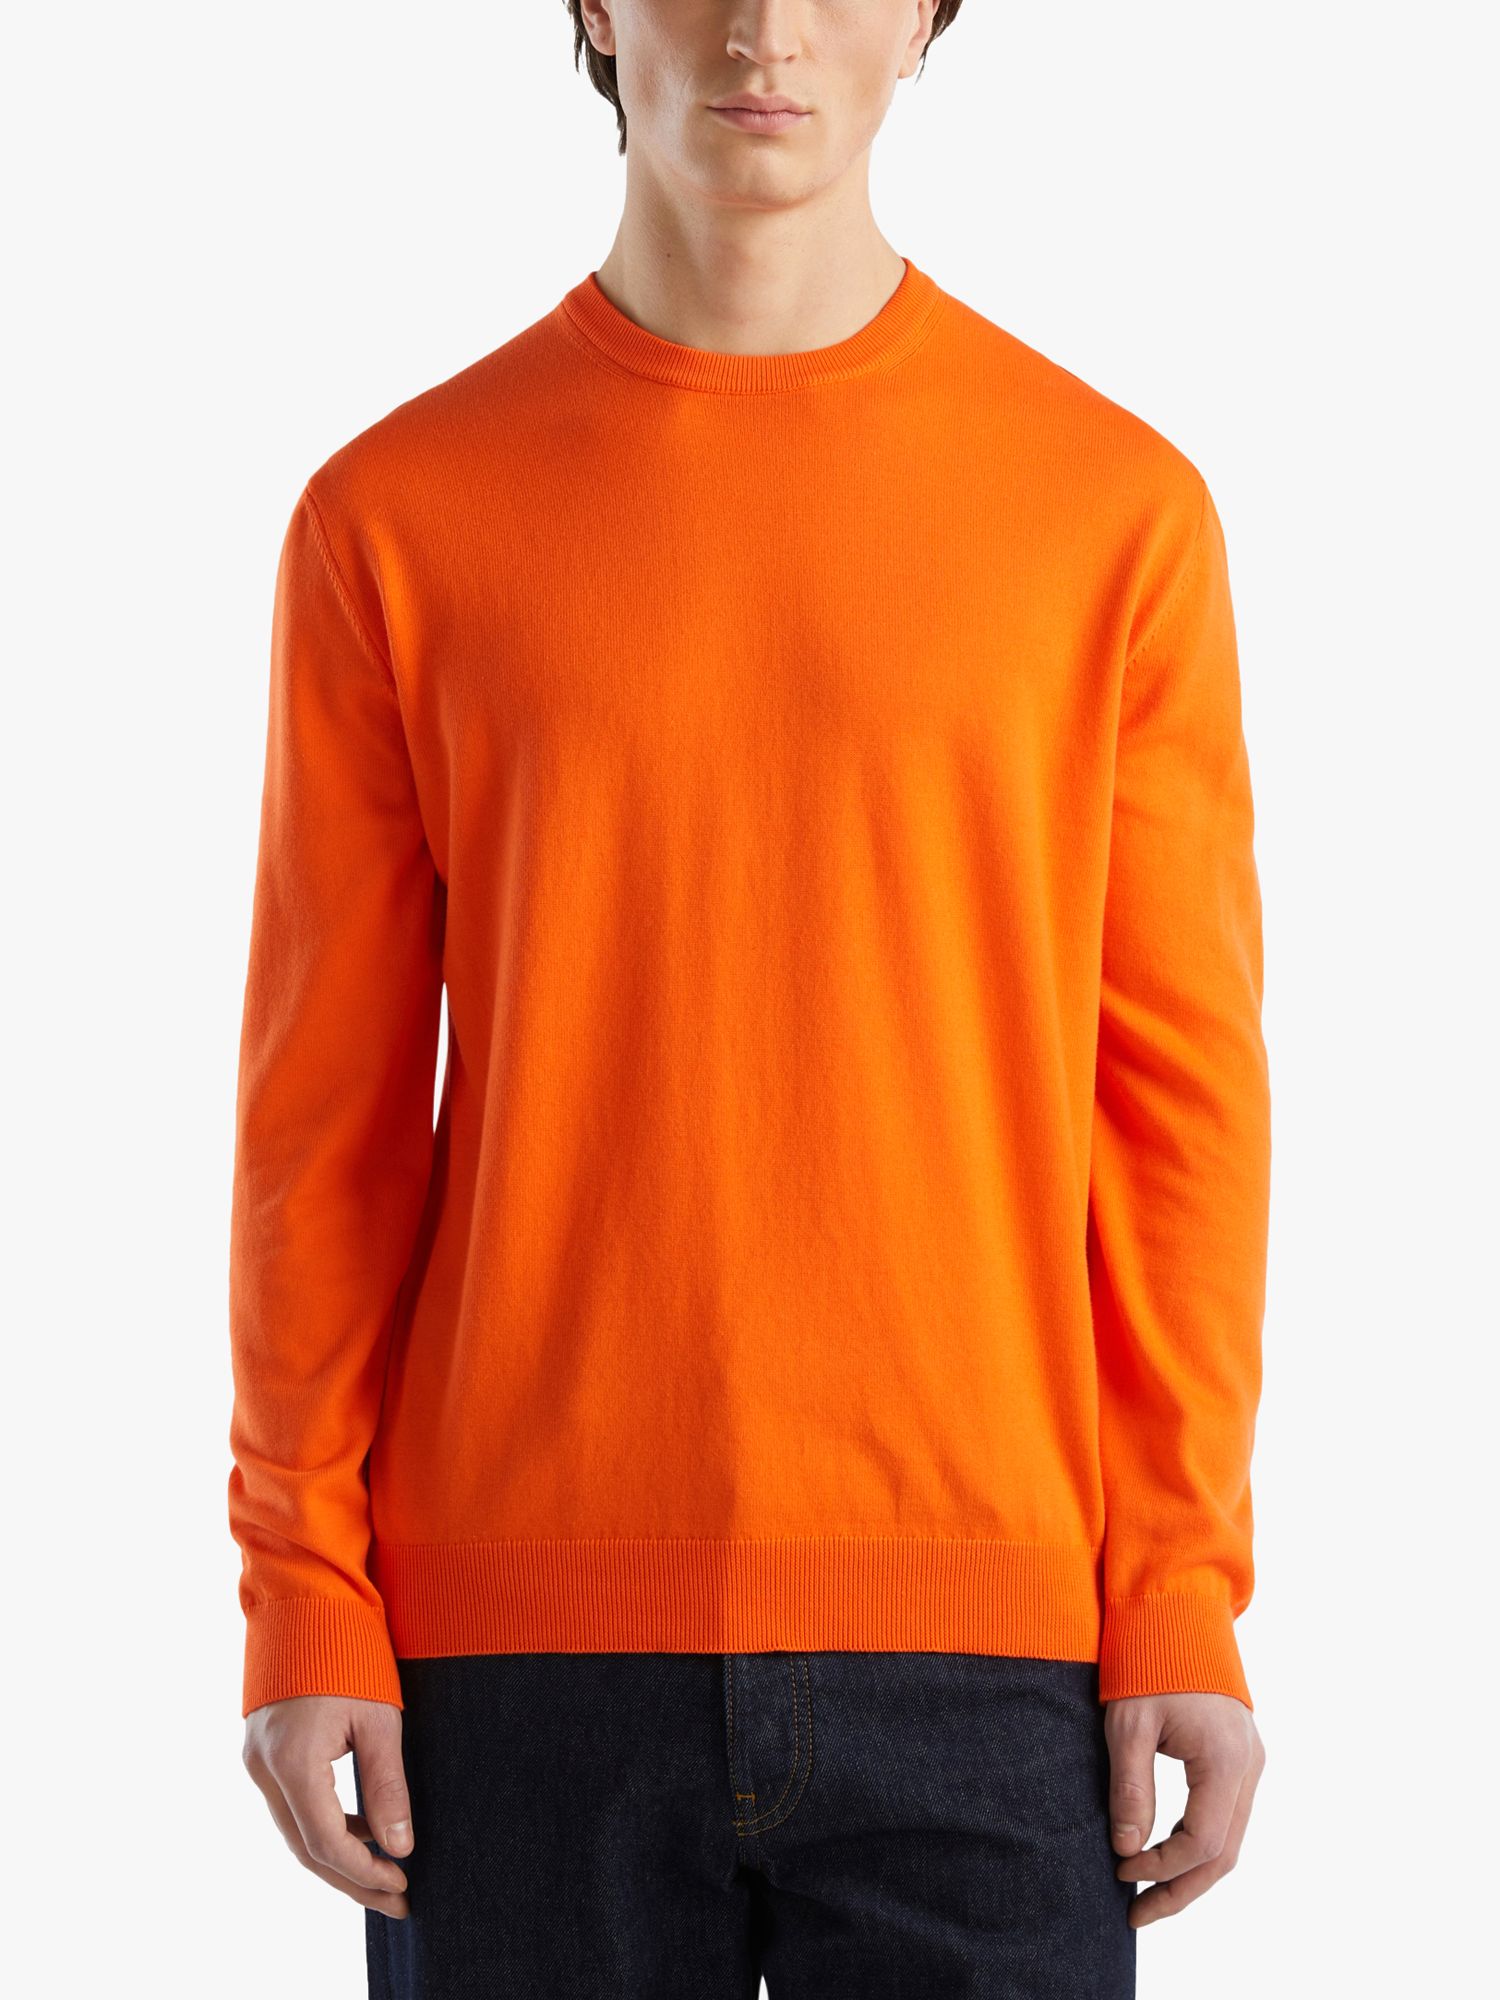 Benetton Cotton Crew Neck Sweater, Orange, L